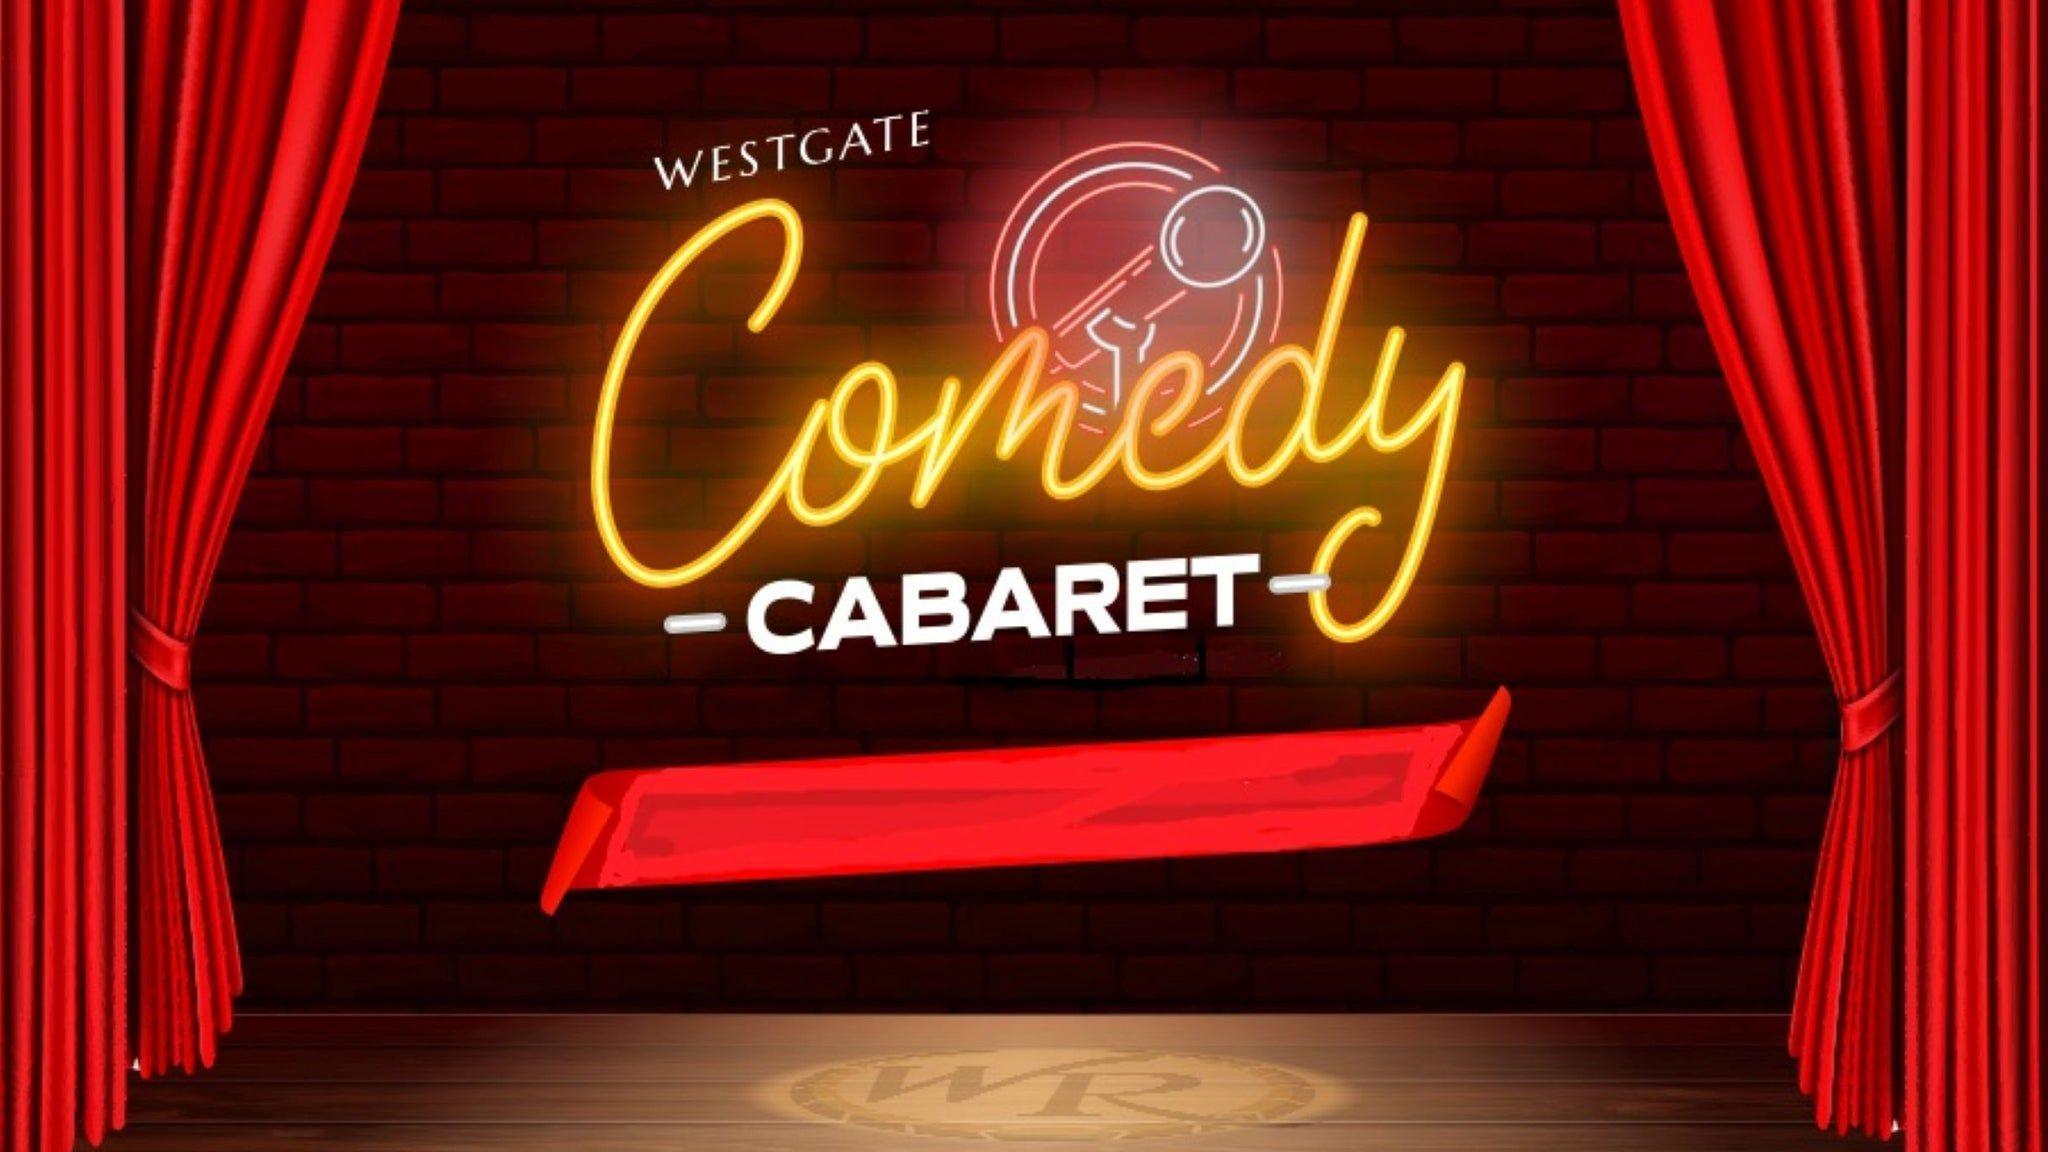 Westgate Comedy Cabaret